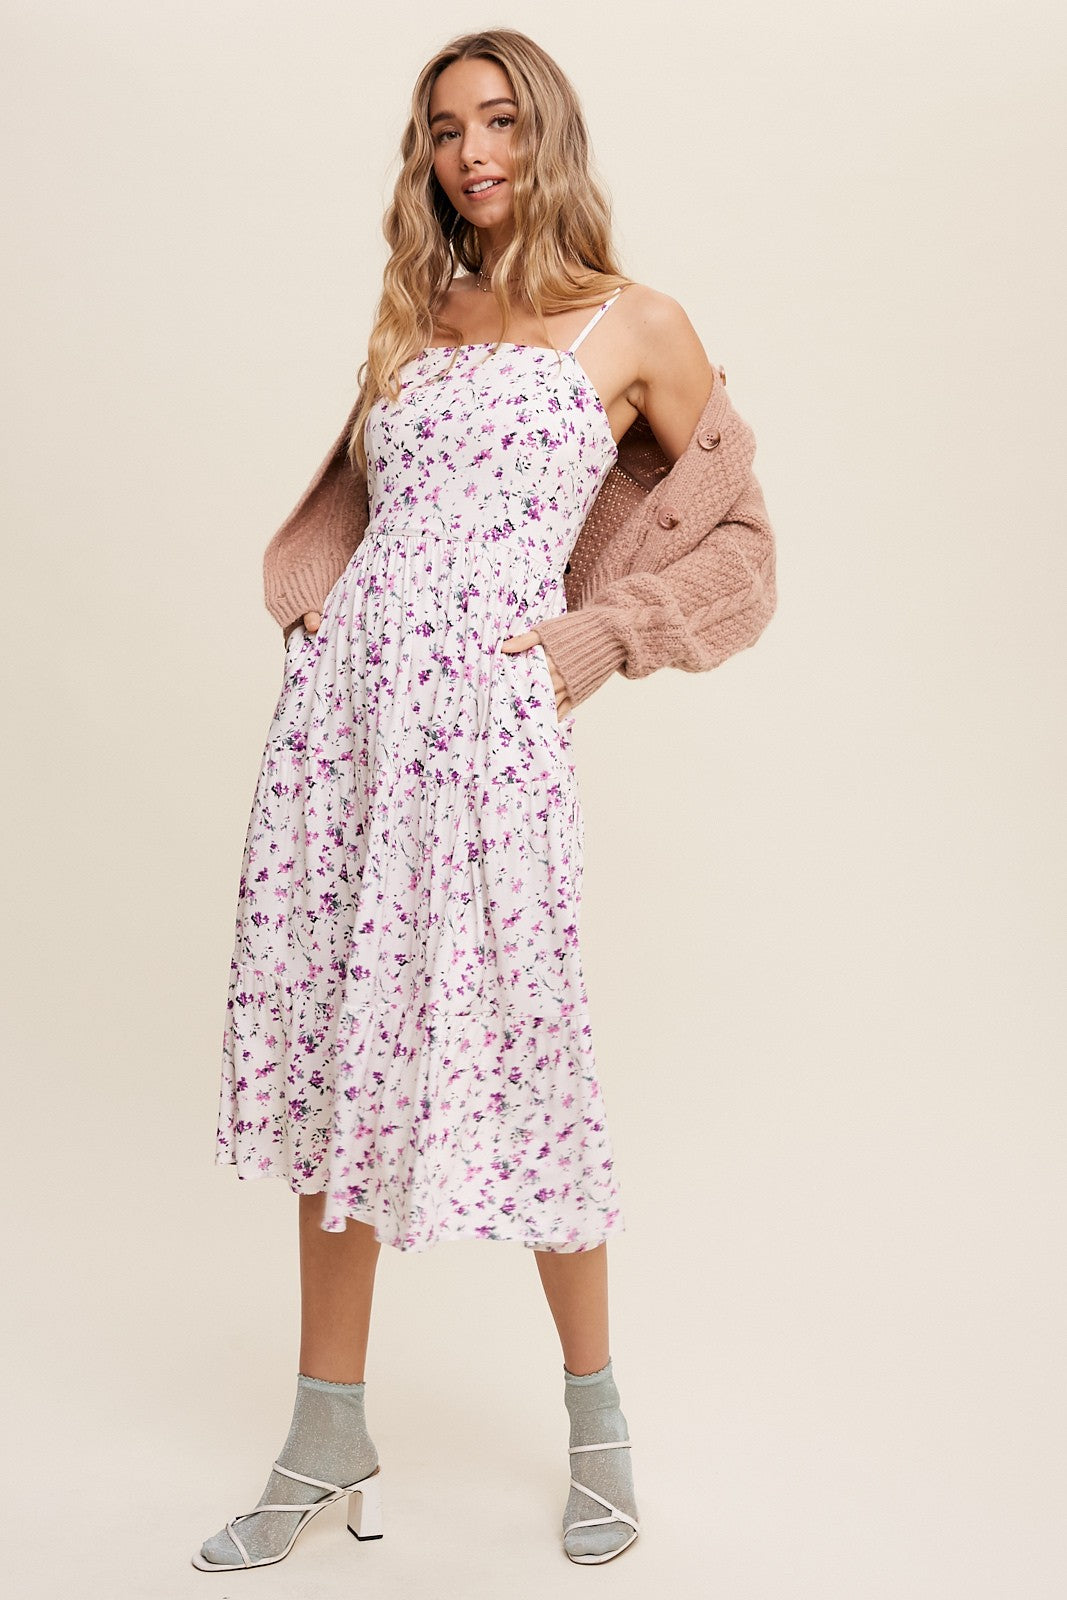 Lavender Floral Print Square Neck A-Line Skirt Midi Dress